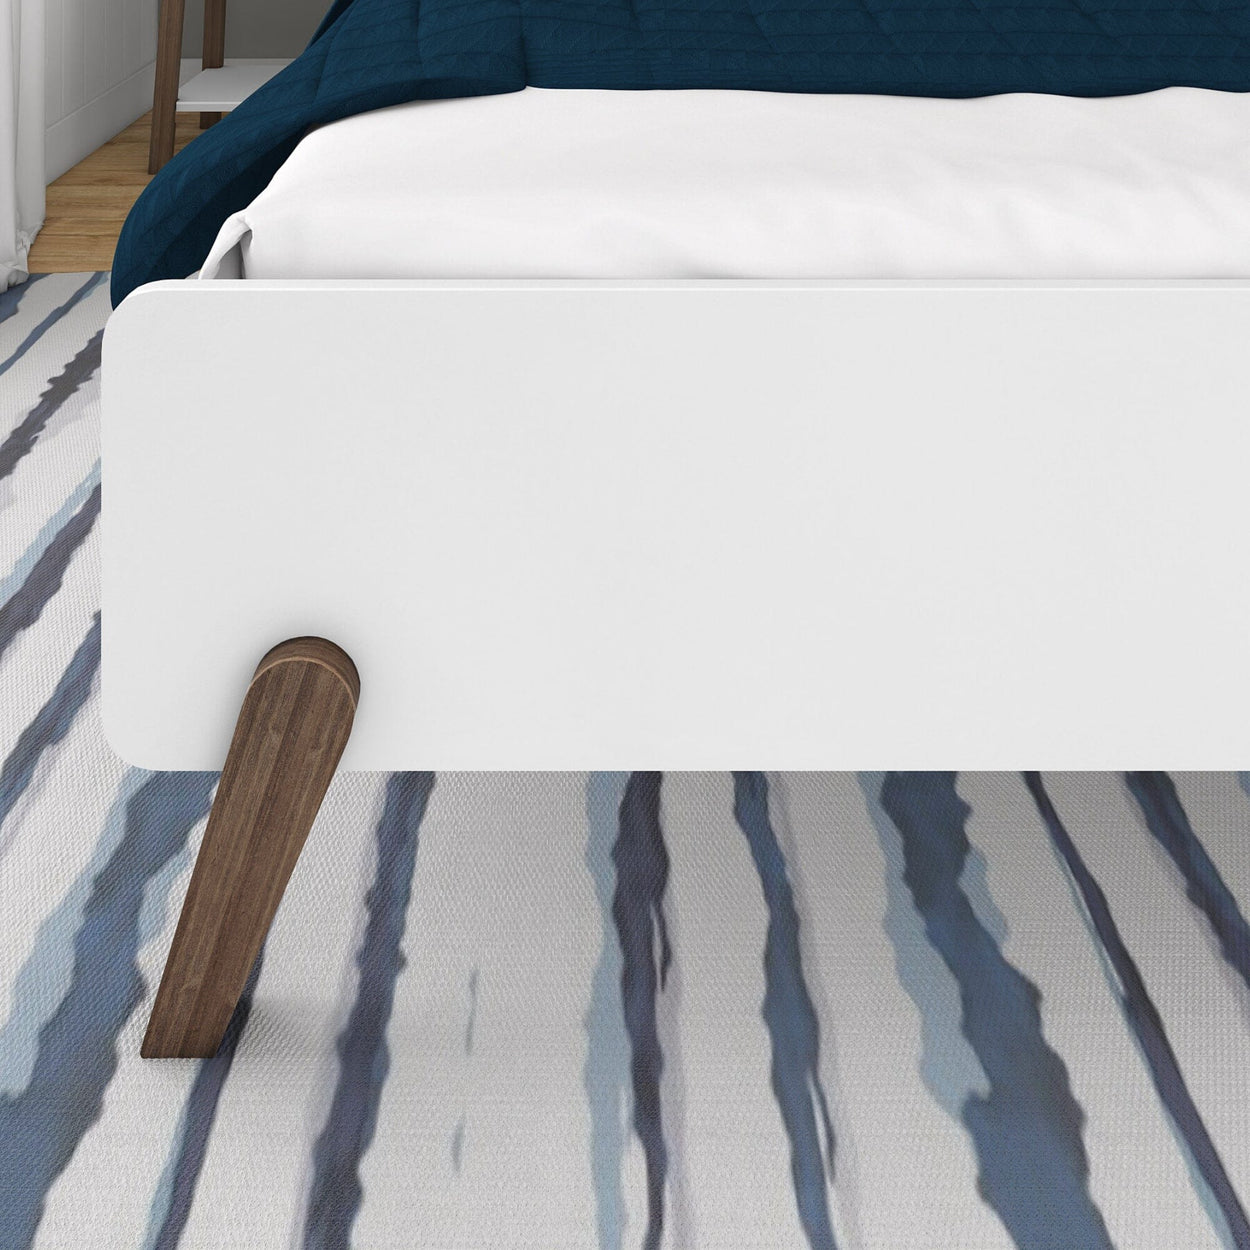 200322-528 : Kids Beds Mid-Century Modern Queen-Size Panel Bed, White/Walnut